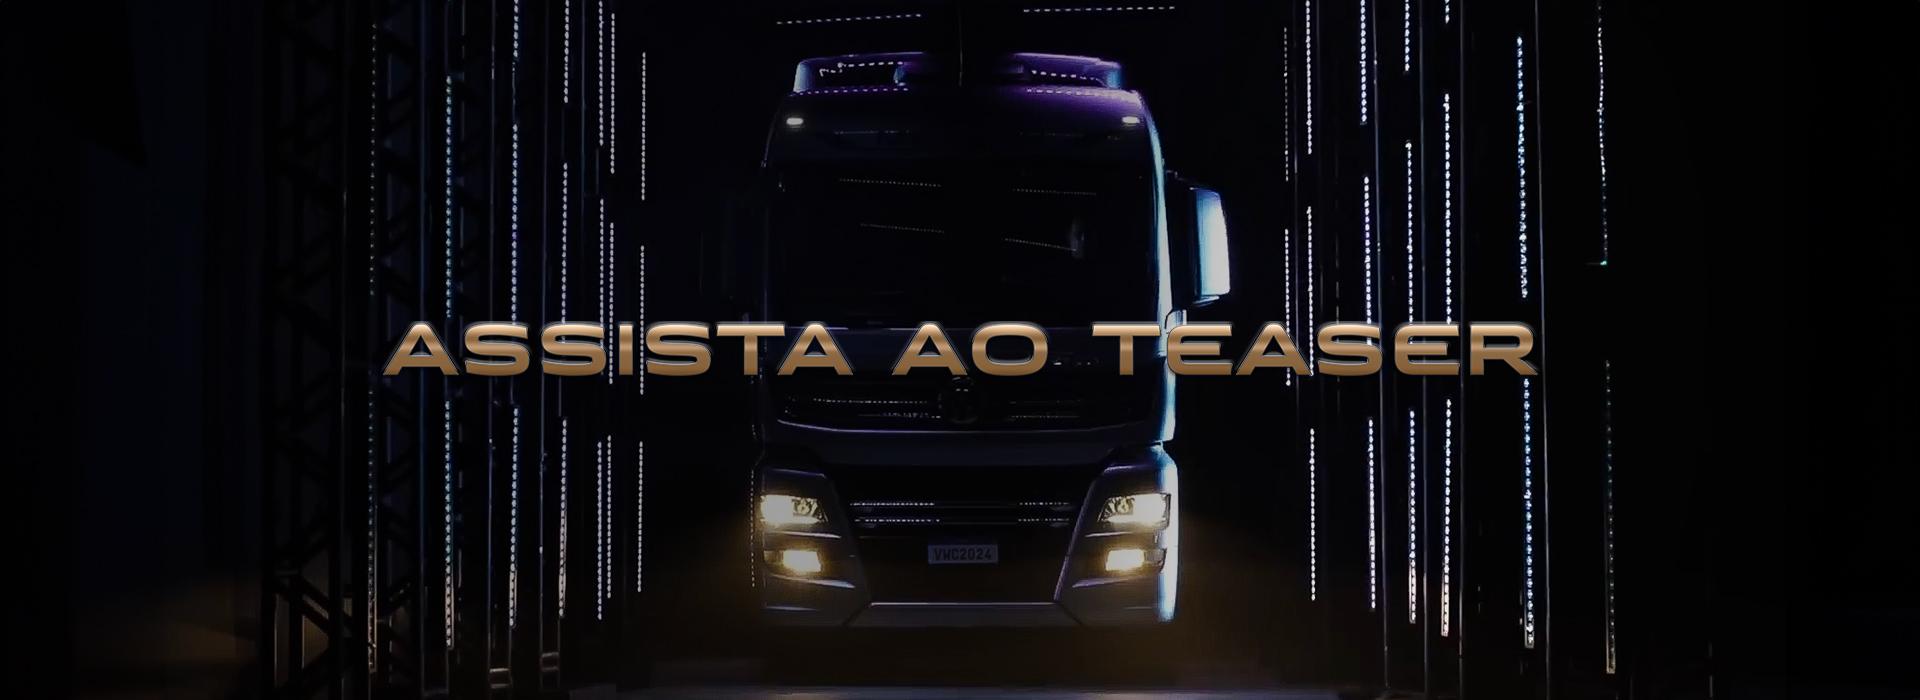 Banner of the truck Família Meteor